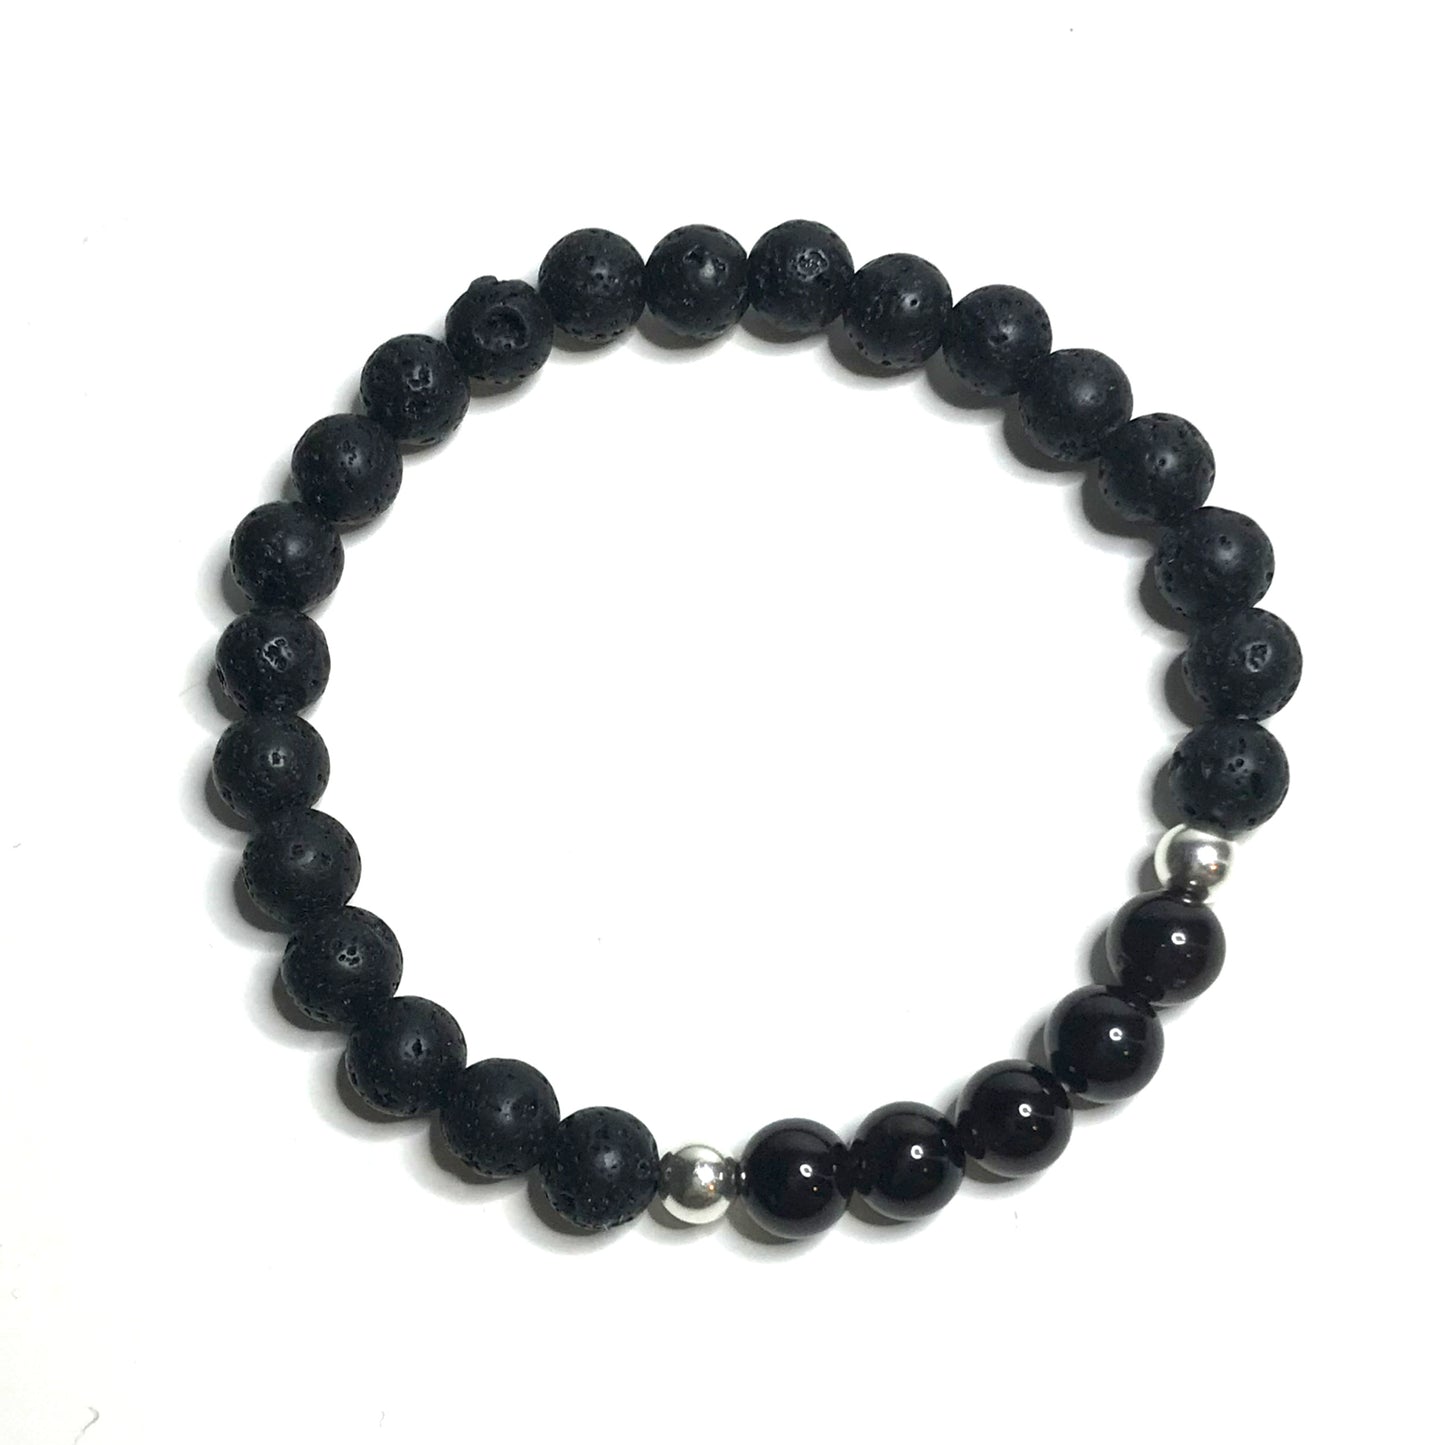 Garnet crystal bracelet with lava rock beads